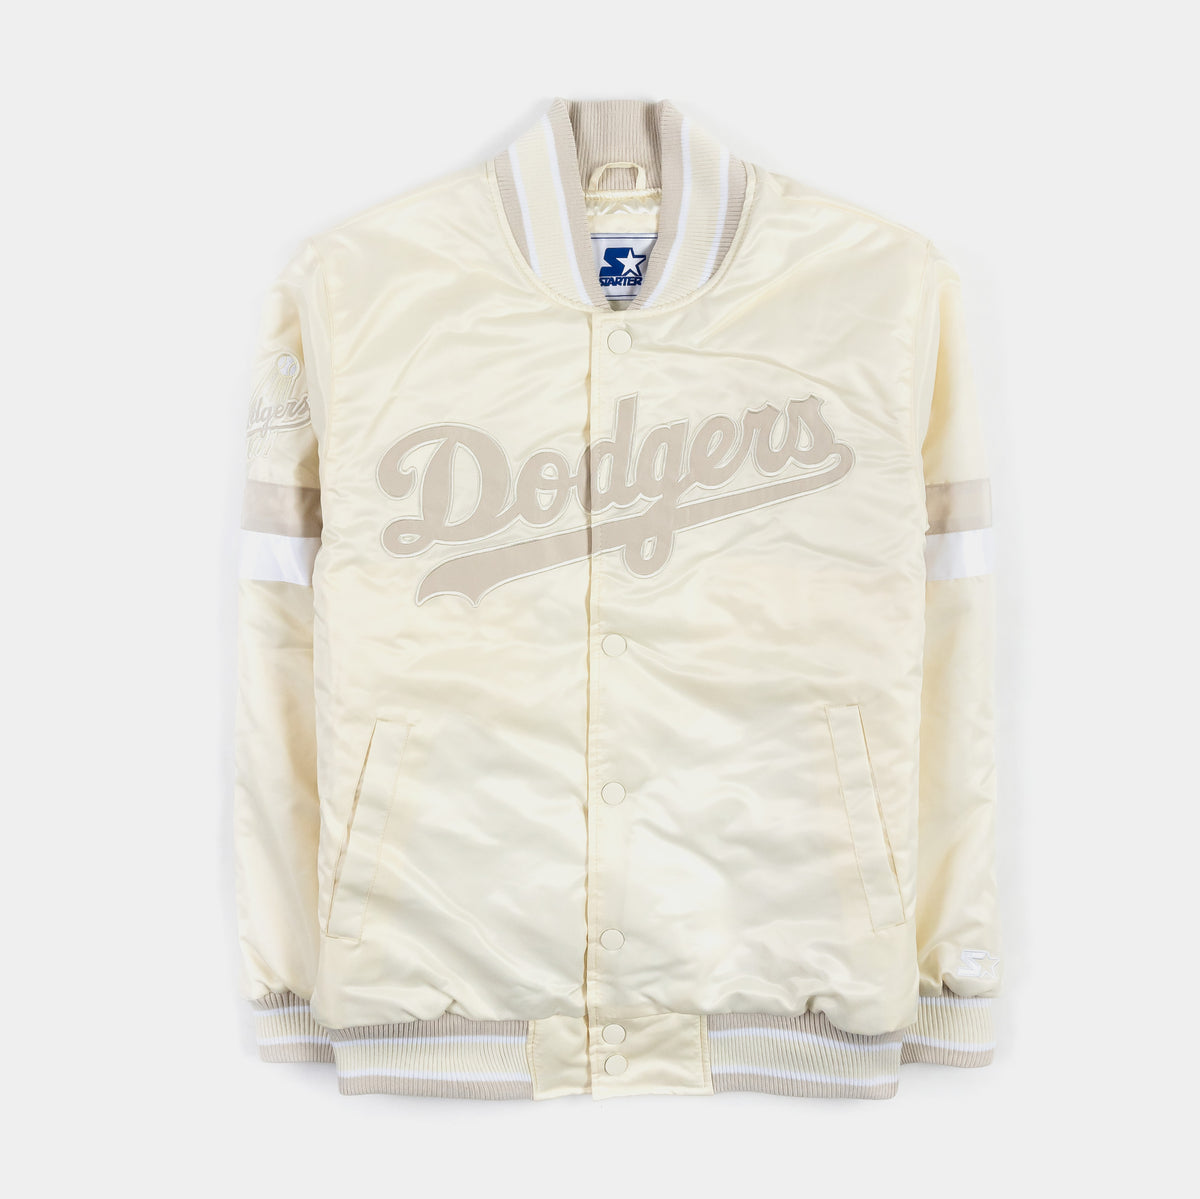 Dodgers Jacket, Satin Varsity, Blue - S/M, Supreme – Gameday by Vee